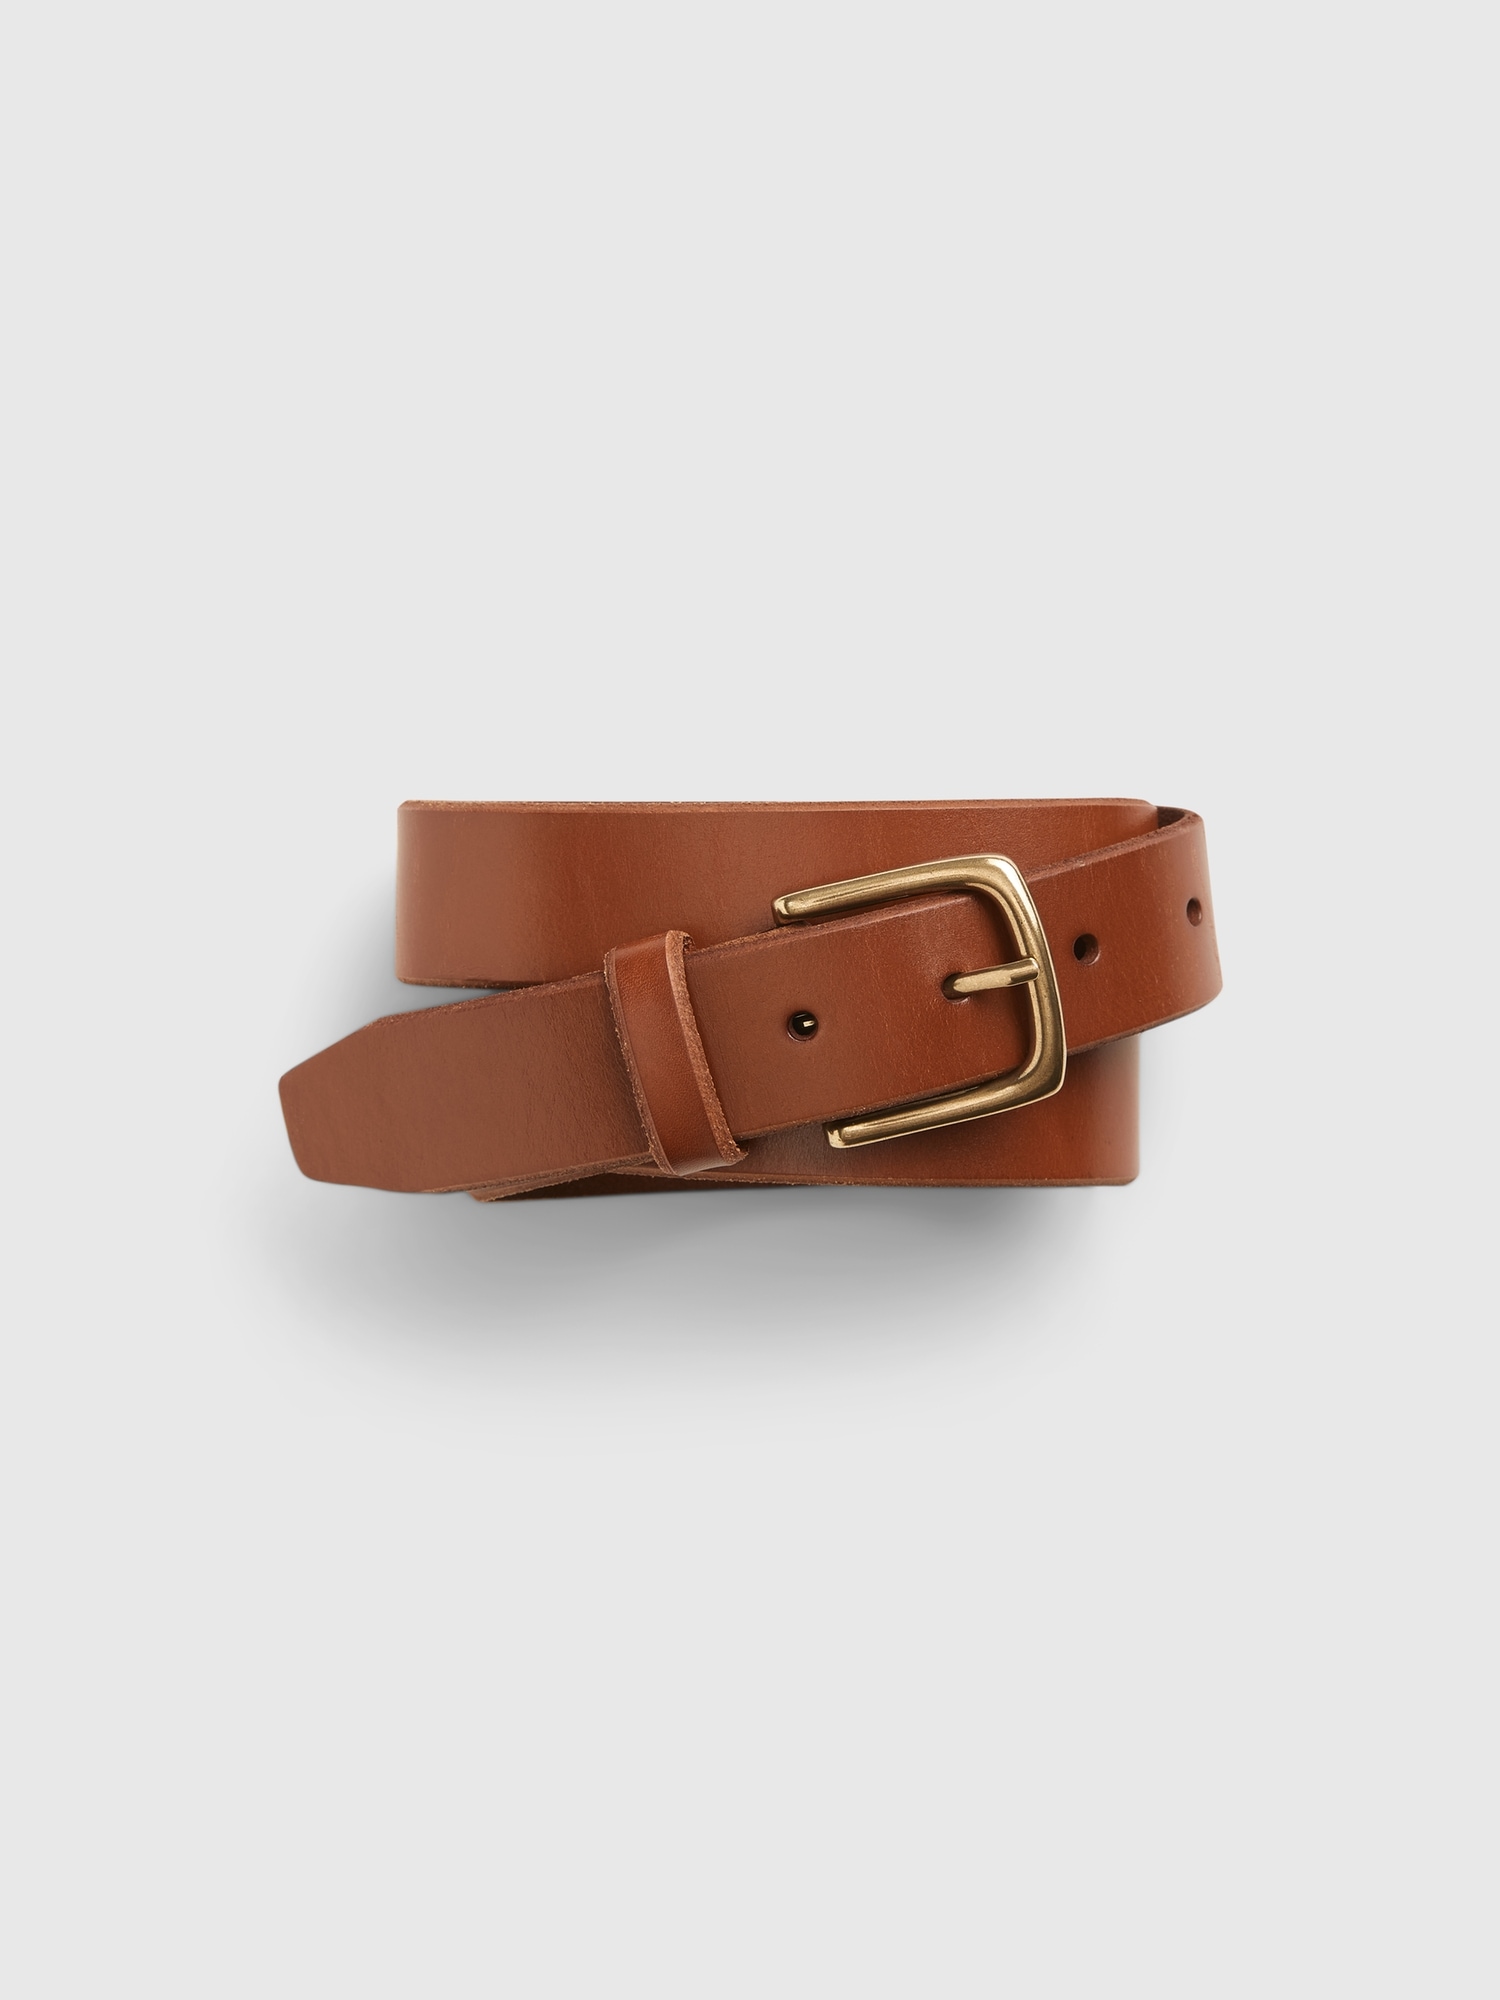 Gap Leather Belt brown. 1